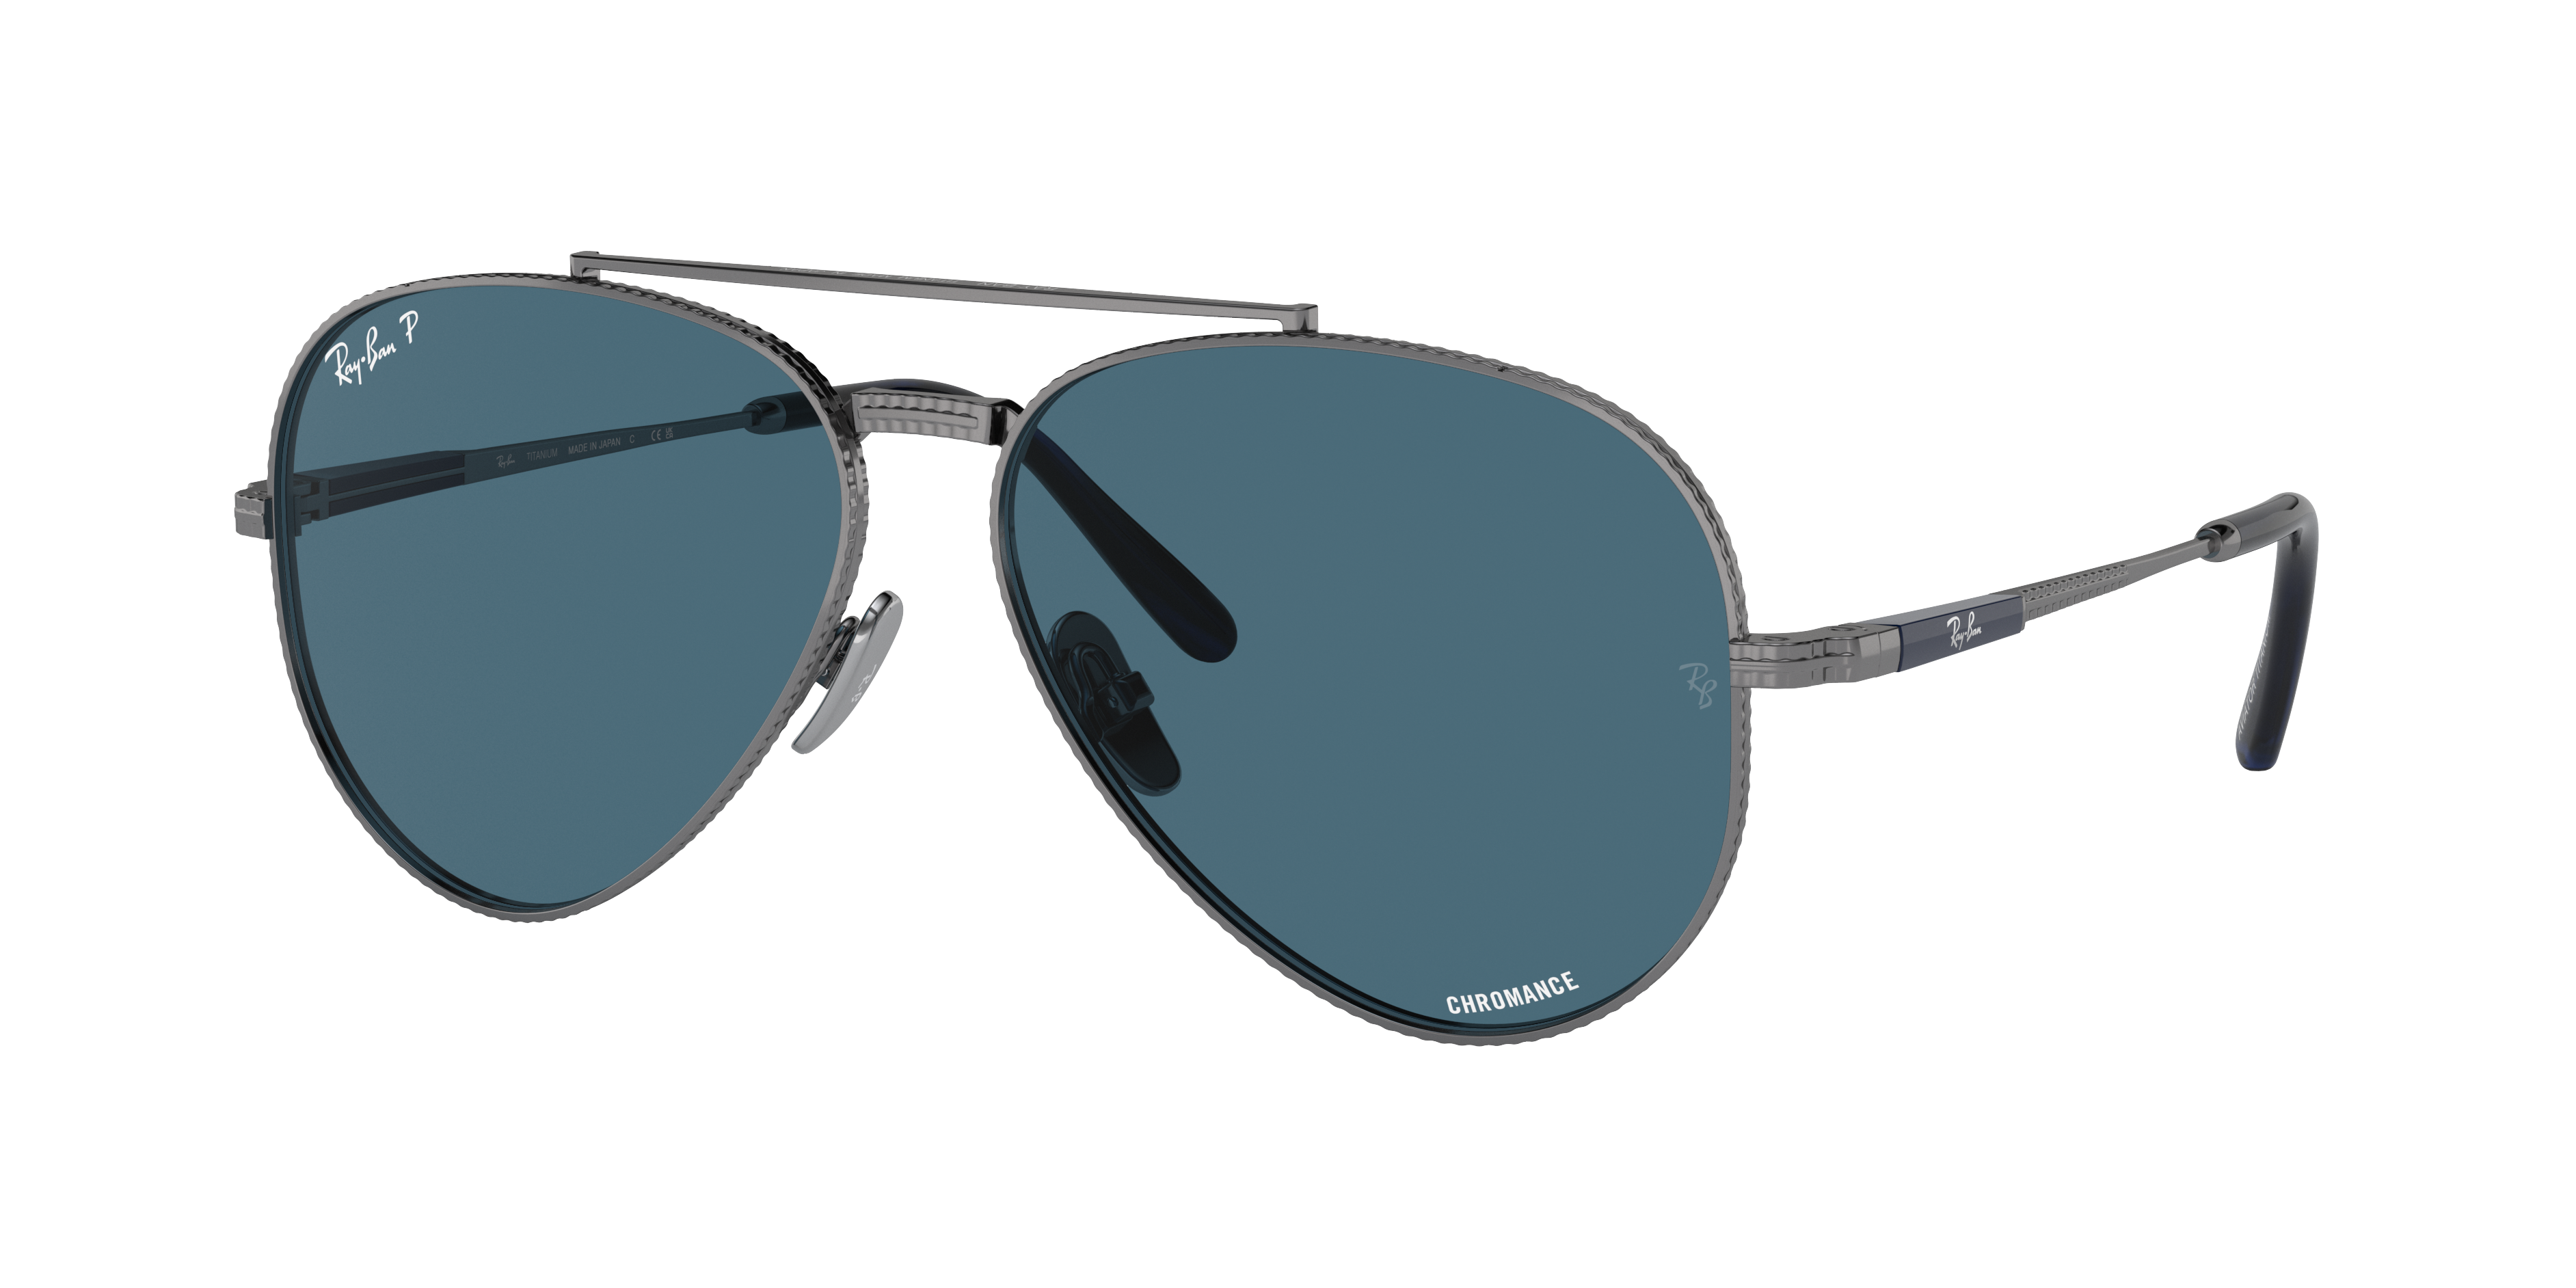 Aviator Ii Titanium Sunglasses in Gunmetal and Blue | Ray-Ban®